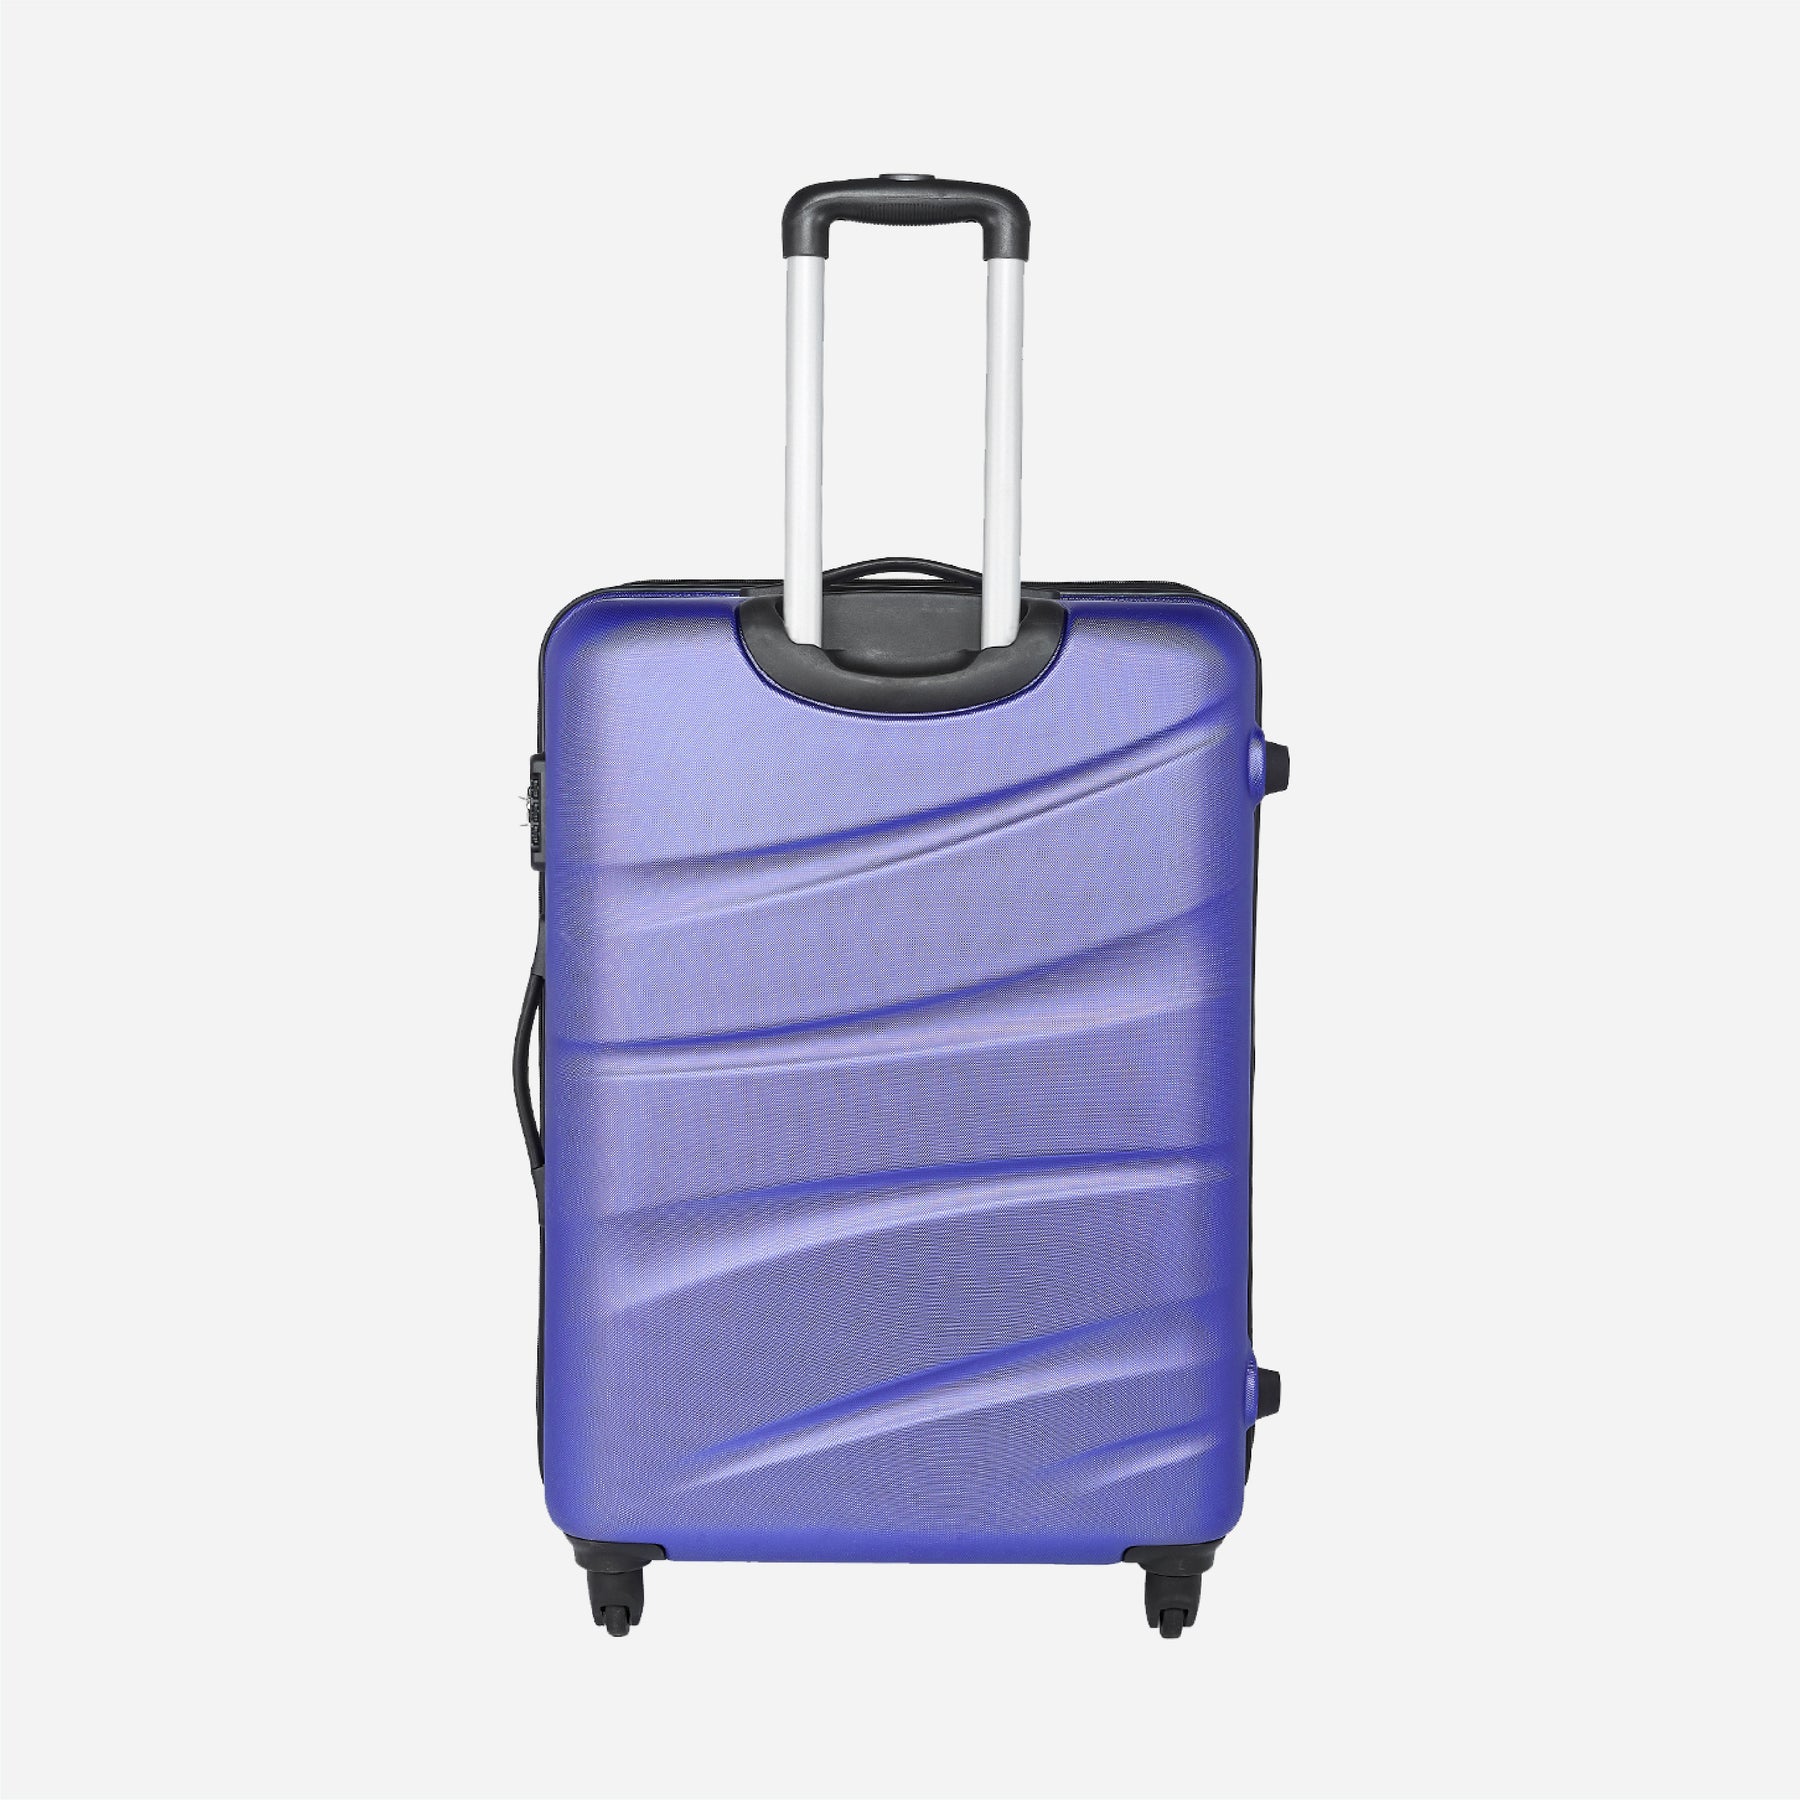 Safari Flo Secure Metallic Purple Trolley Bag with 360° Wheels